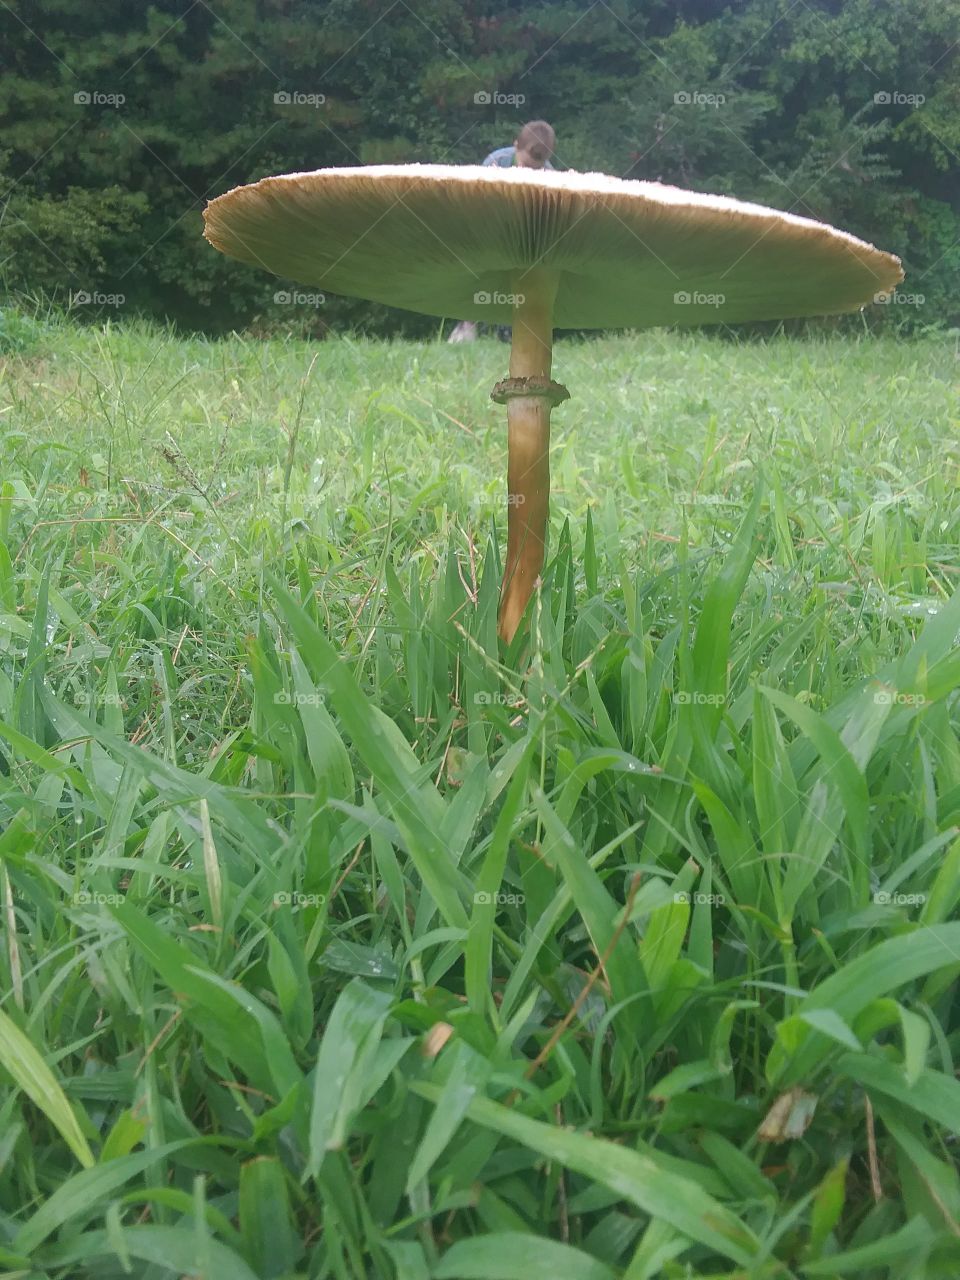 staged climbing on a mushroom